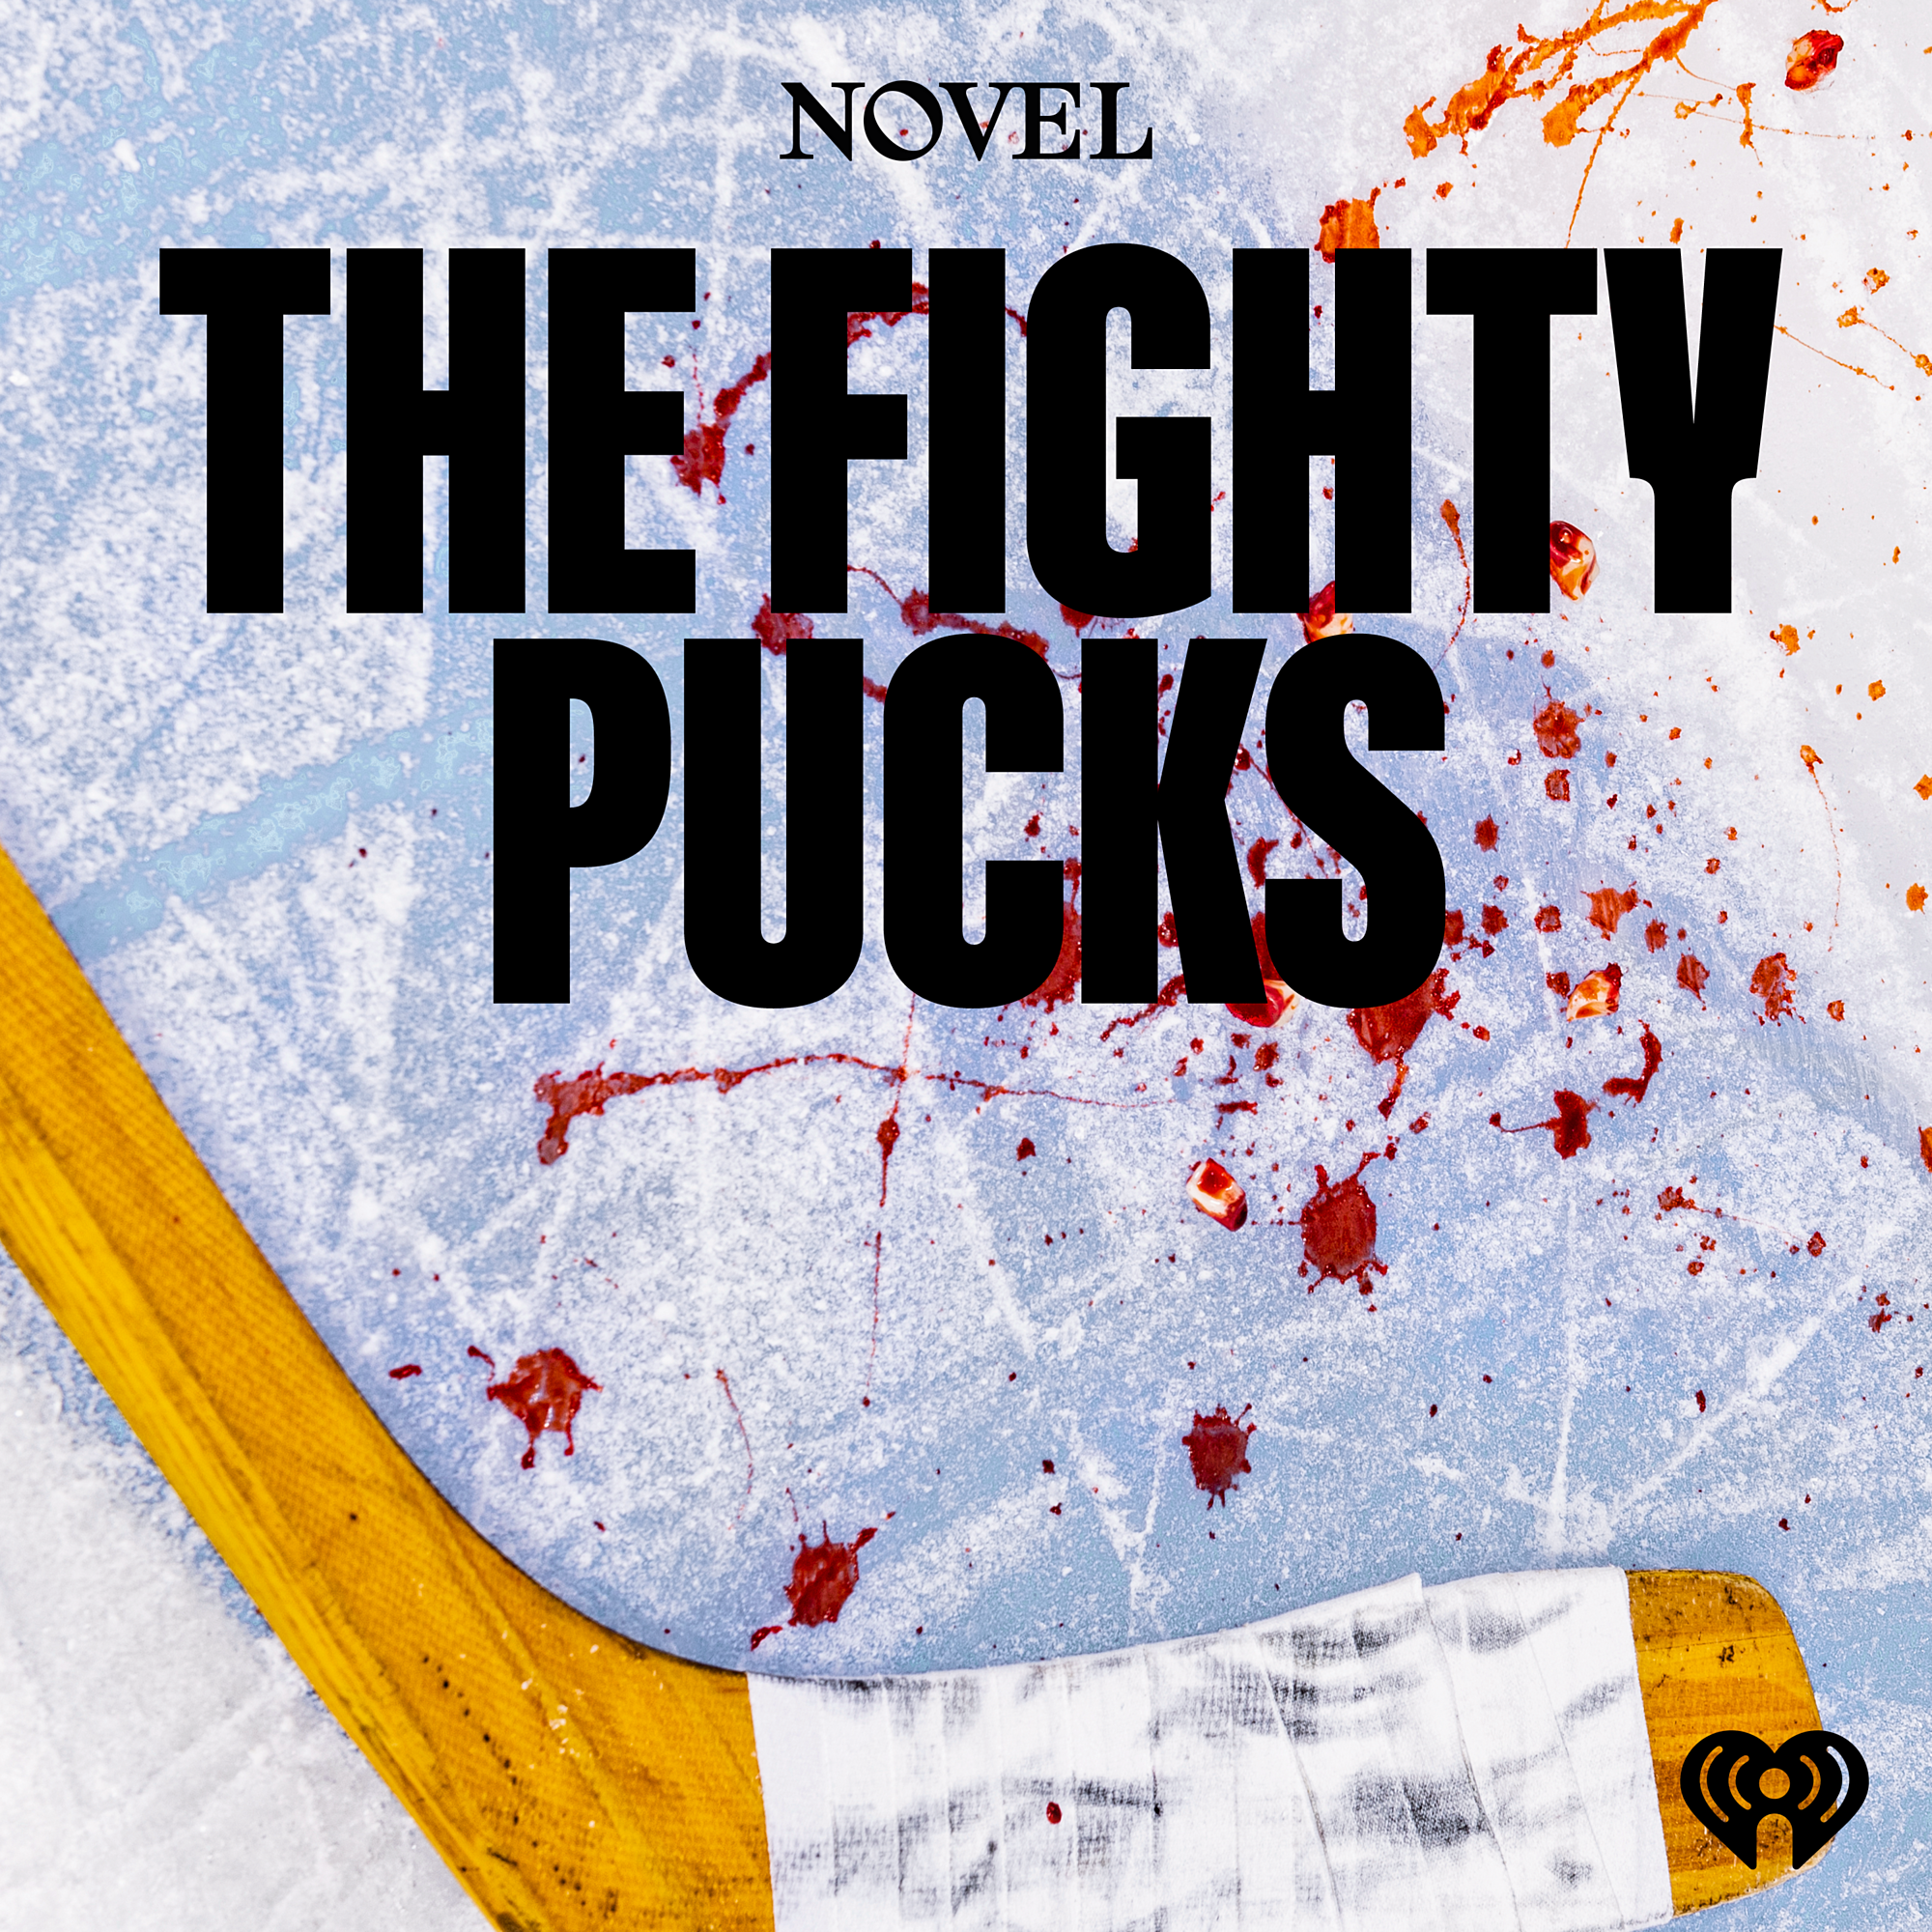  New iHeart/Novel Podcast Looks At Infamous Minor League Hockey Team